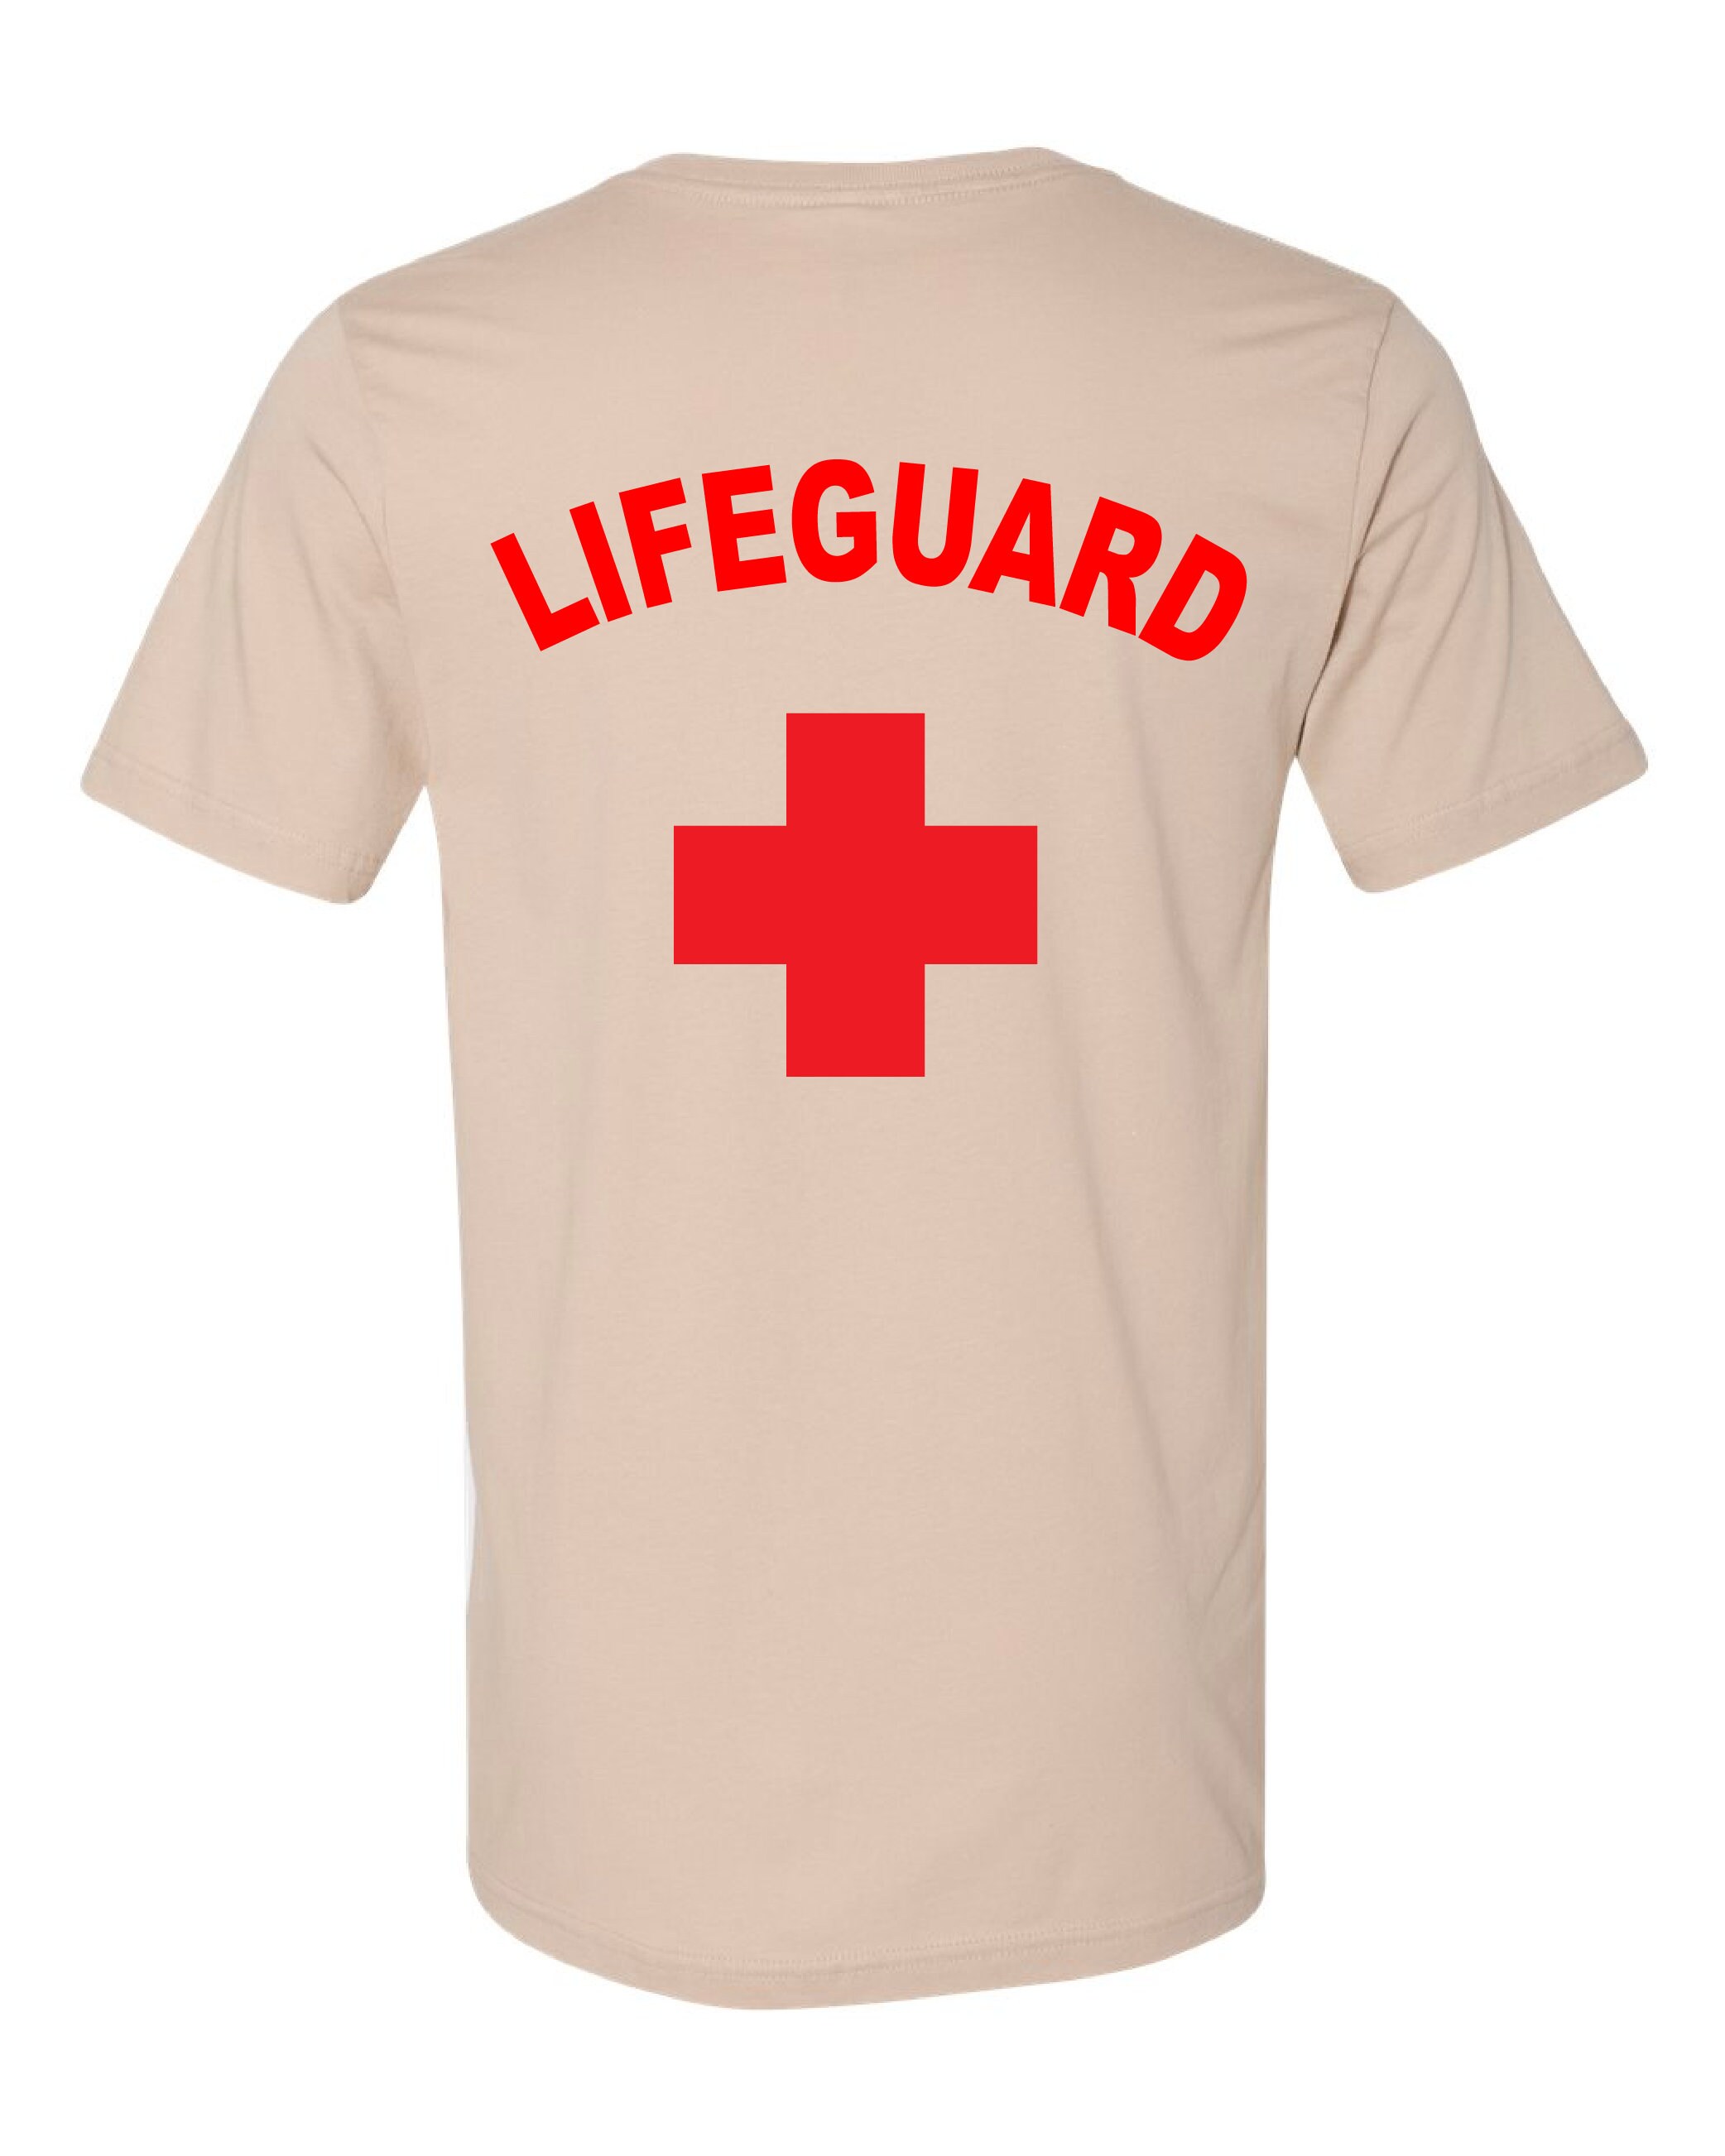 Lifeguard T-shirt Beach Classic Tee Pool Surf - Etsy